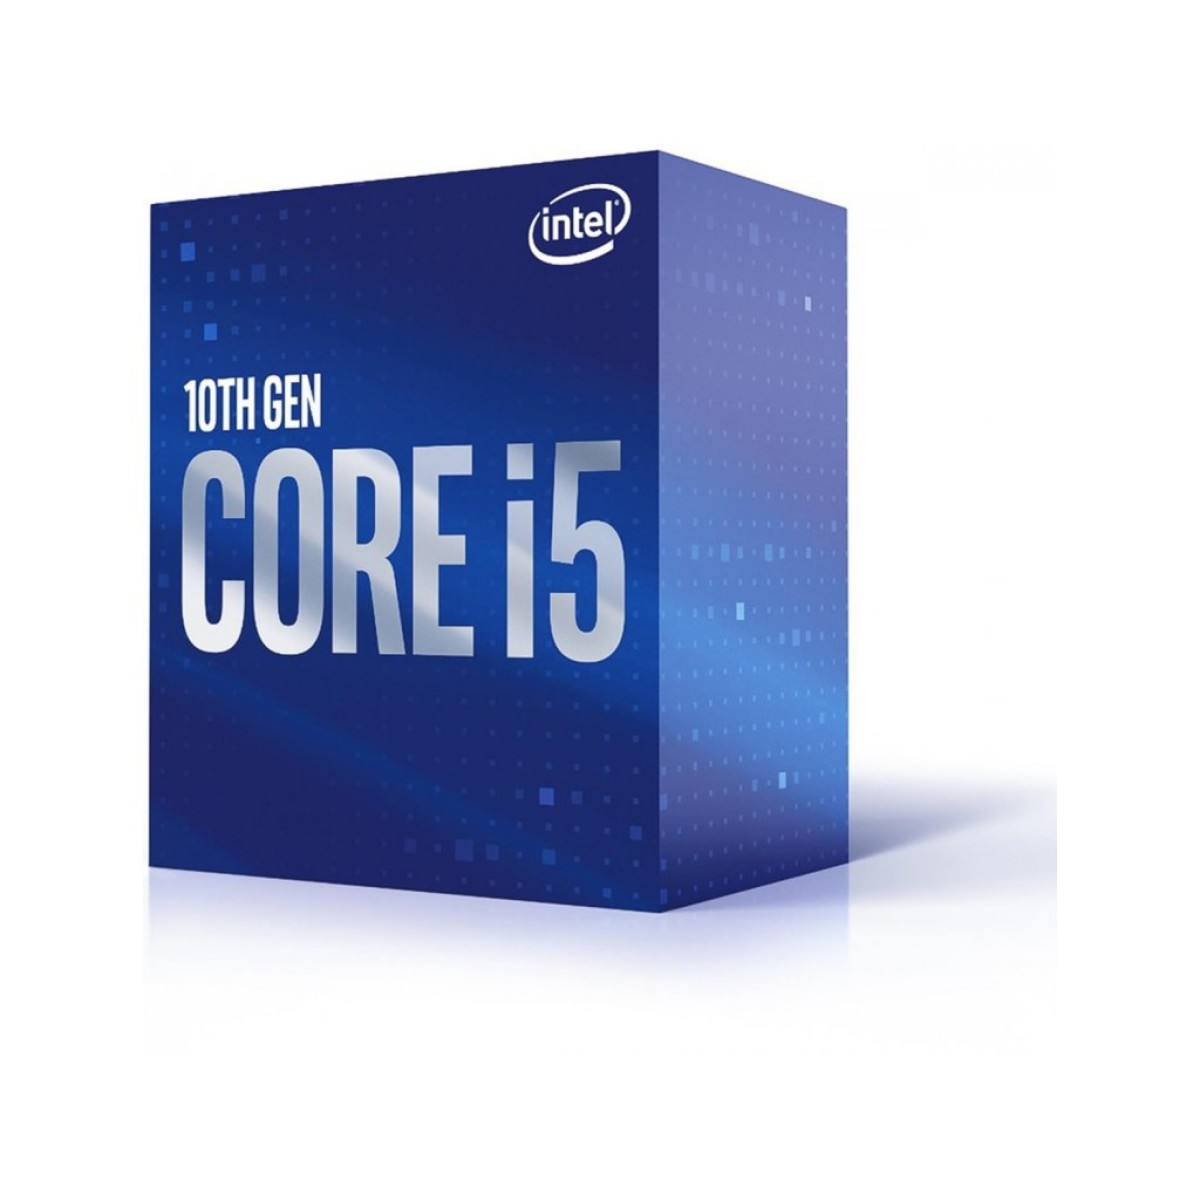 Intel Core i5 10400F Processor 10th Gen